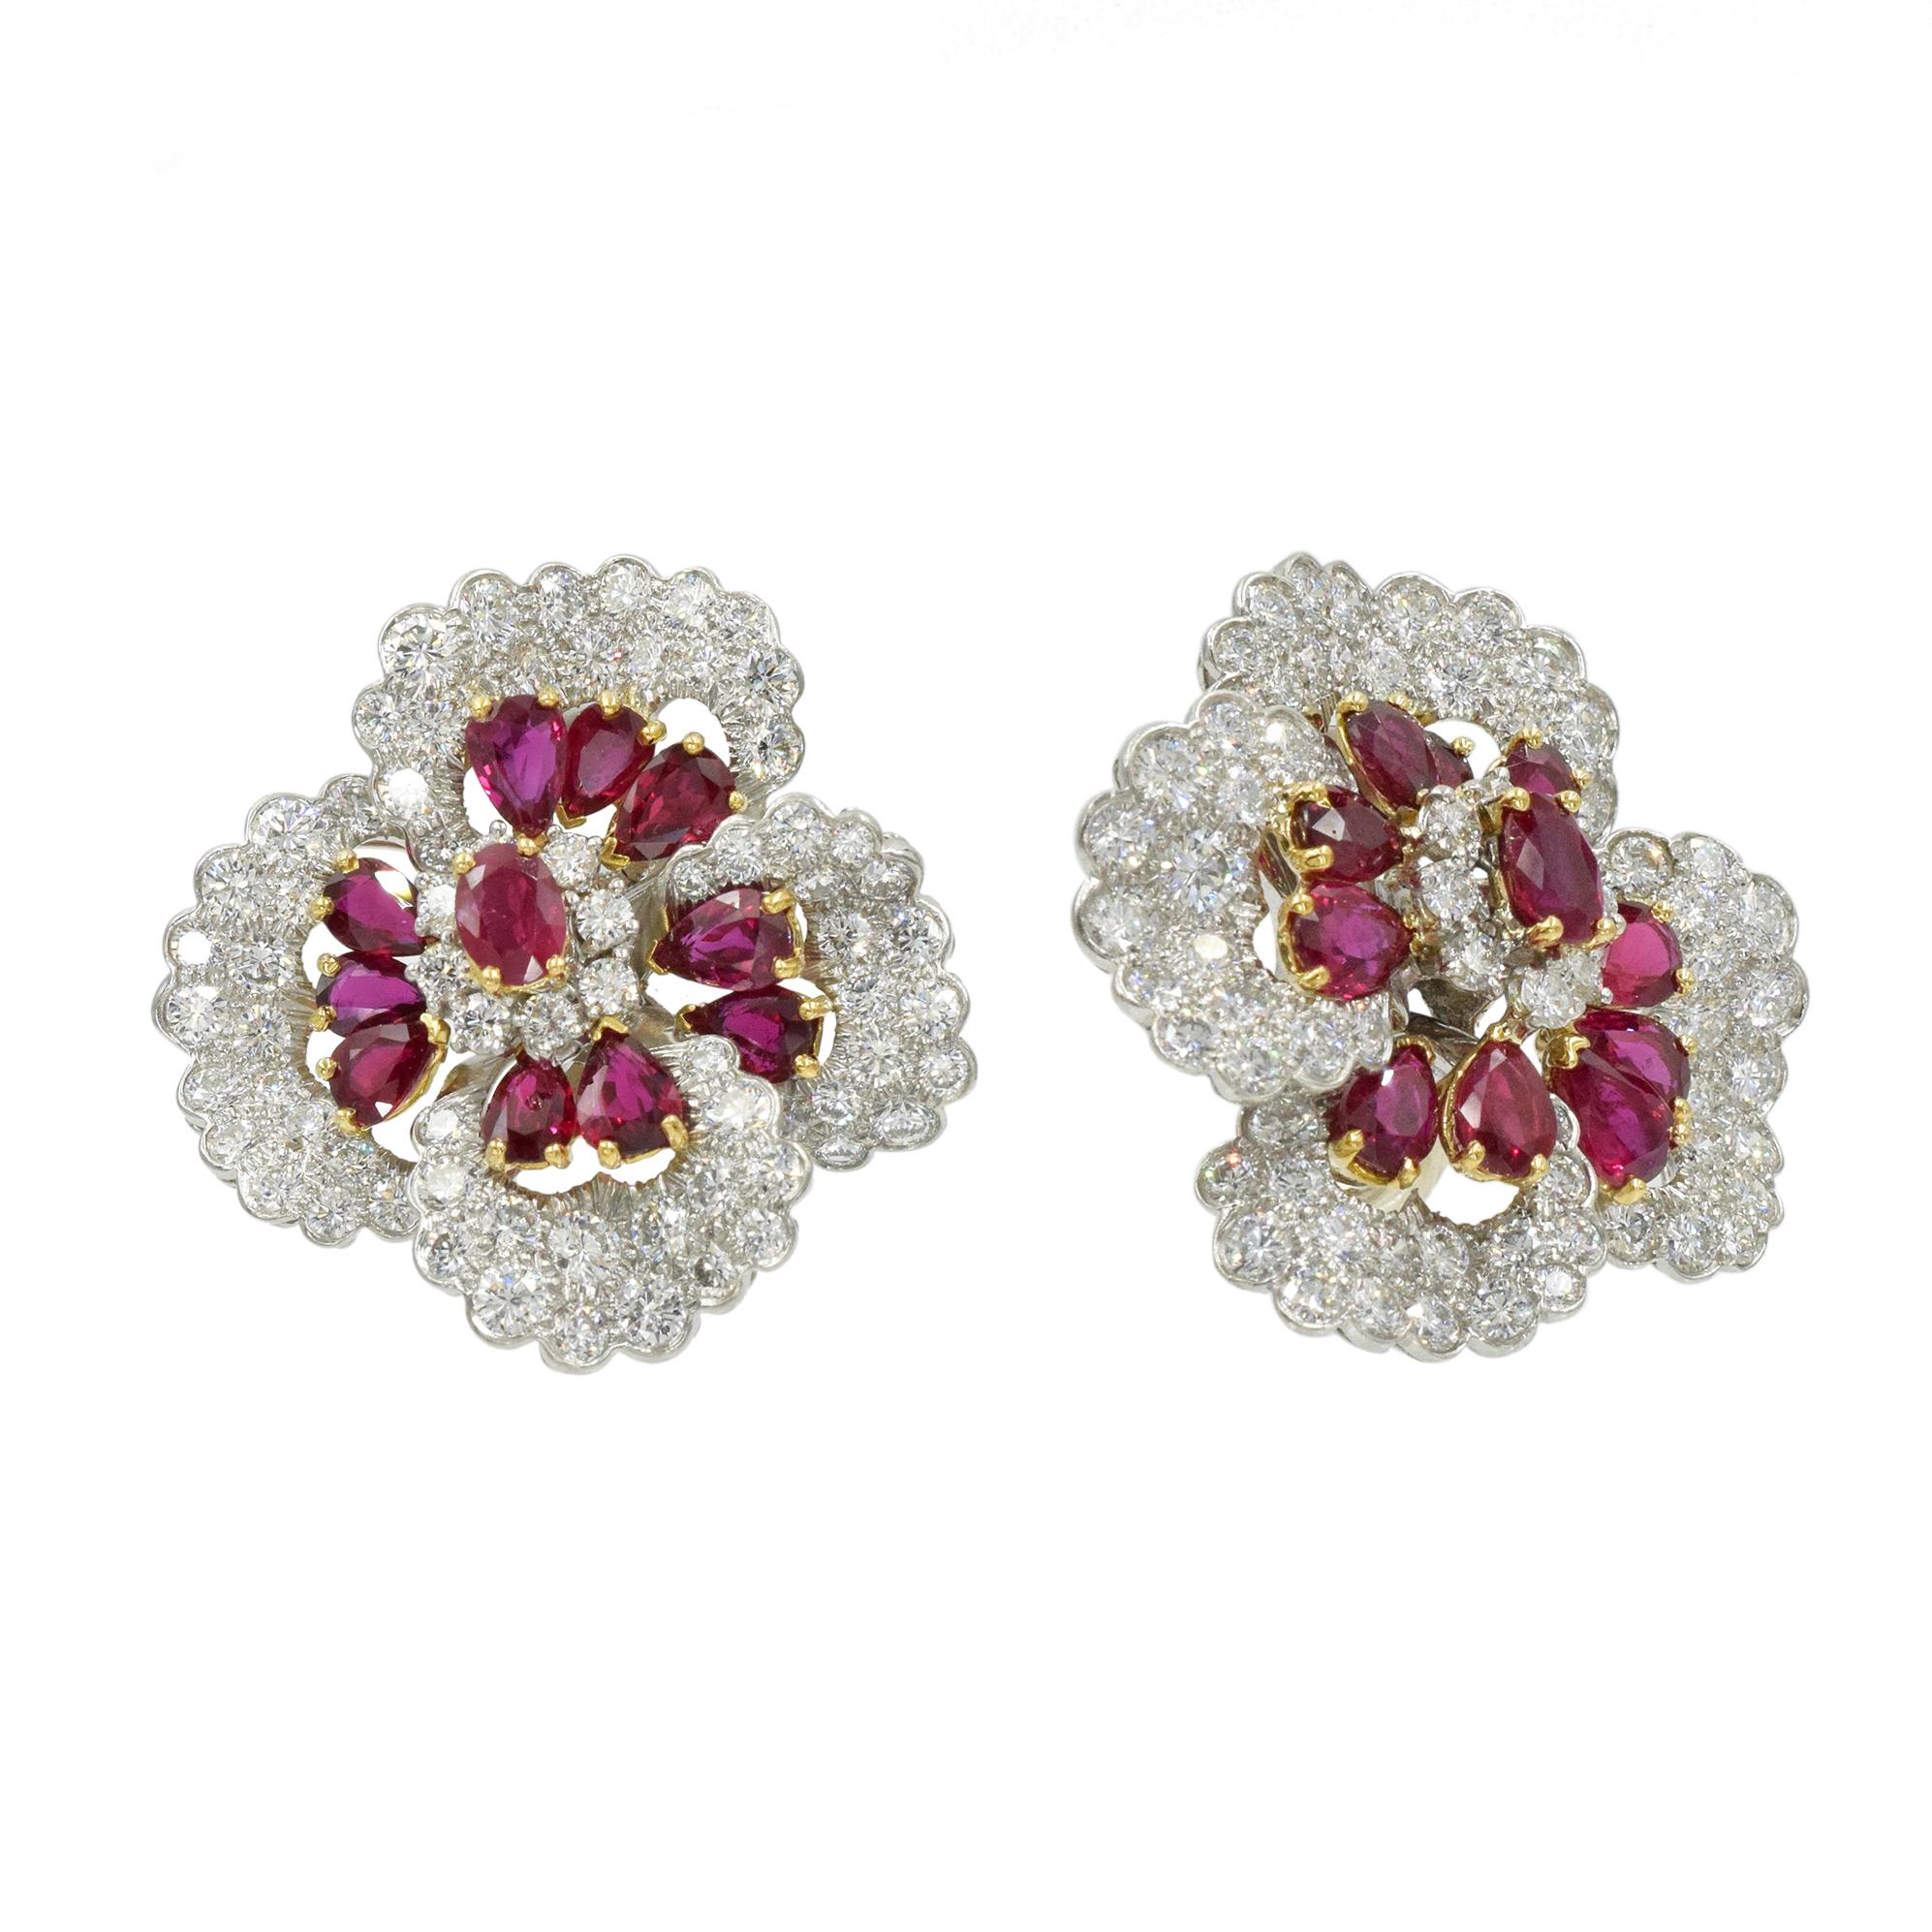 Women's Oscar Heyman Diamond and Ruby Earrings For Sale